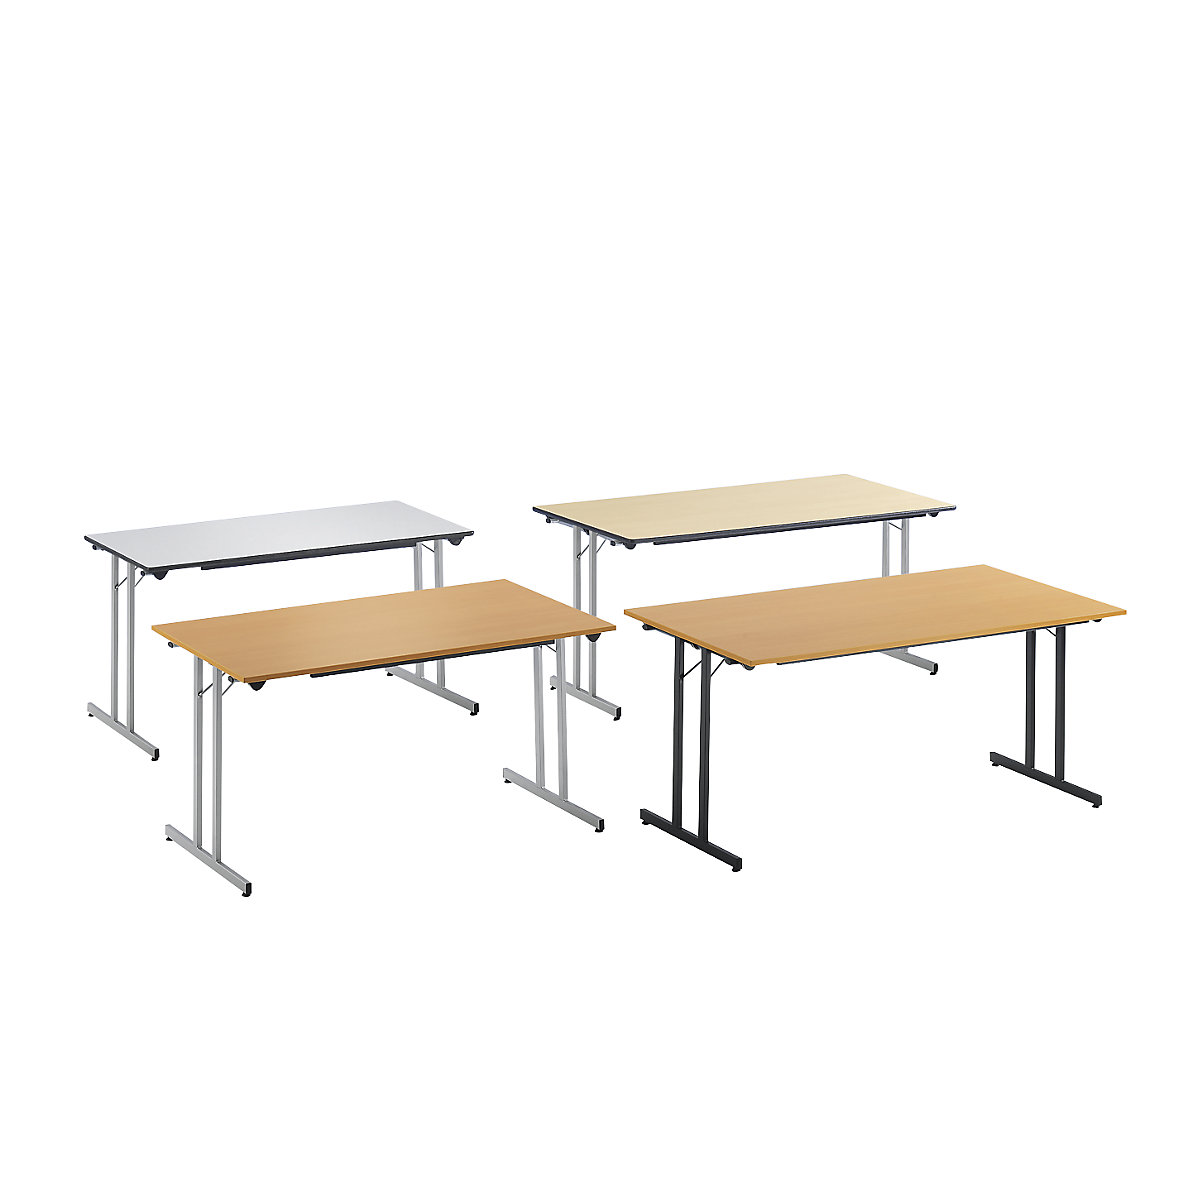 Inklapbare tafel, STANDAARD, frame van vierkante staalbuis met stelvoetjes, 1200 x 600 mm, frame aluminiumkleurig, blad lichtgrijs-1